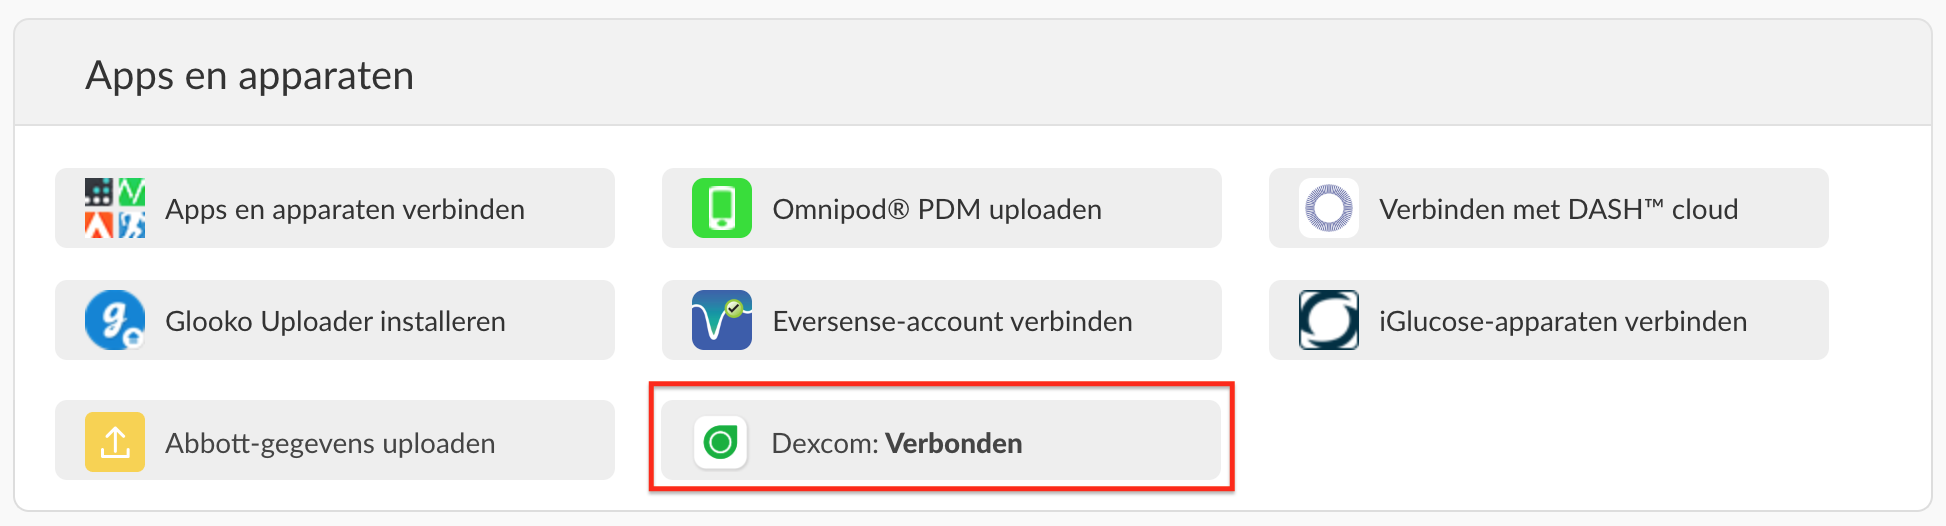 dutch-web-dexcomconnectednew.png